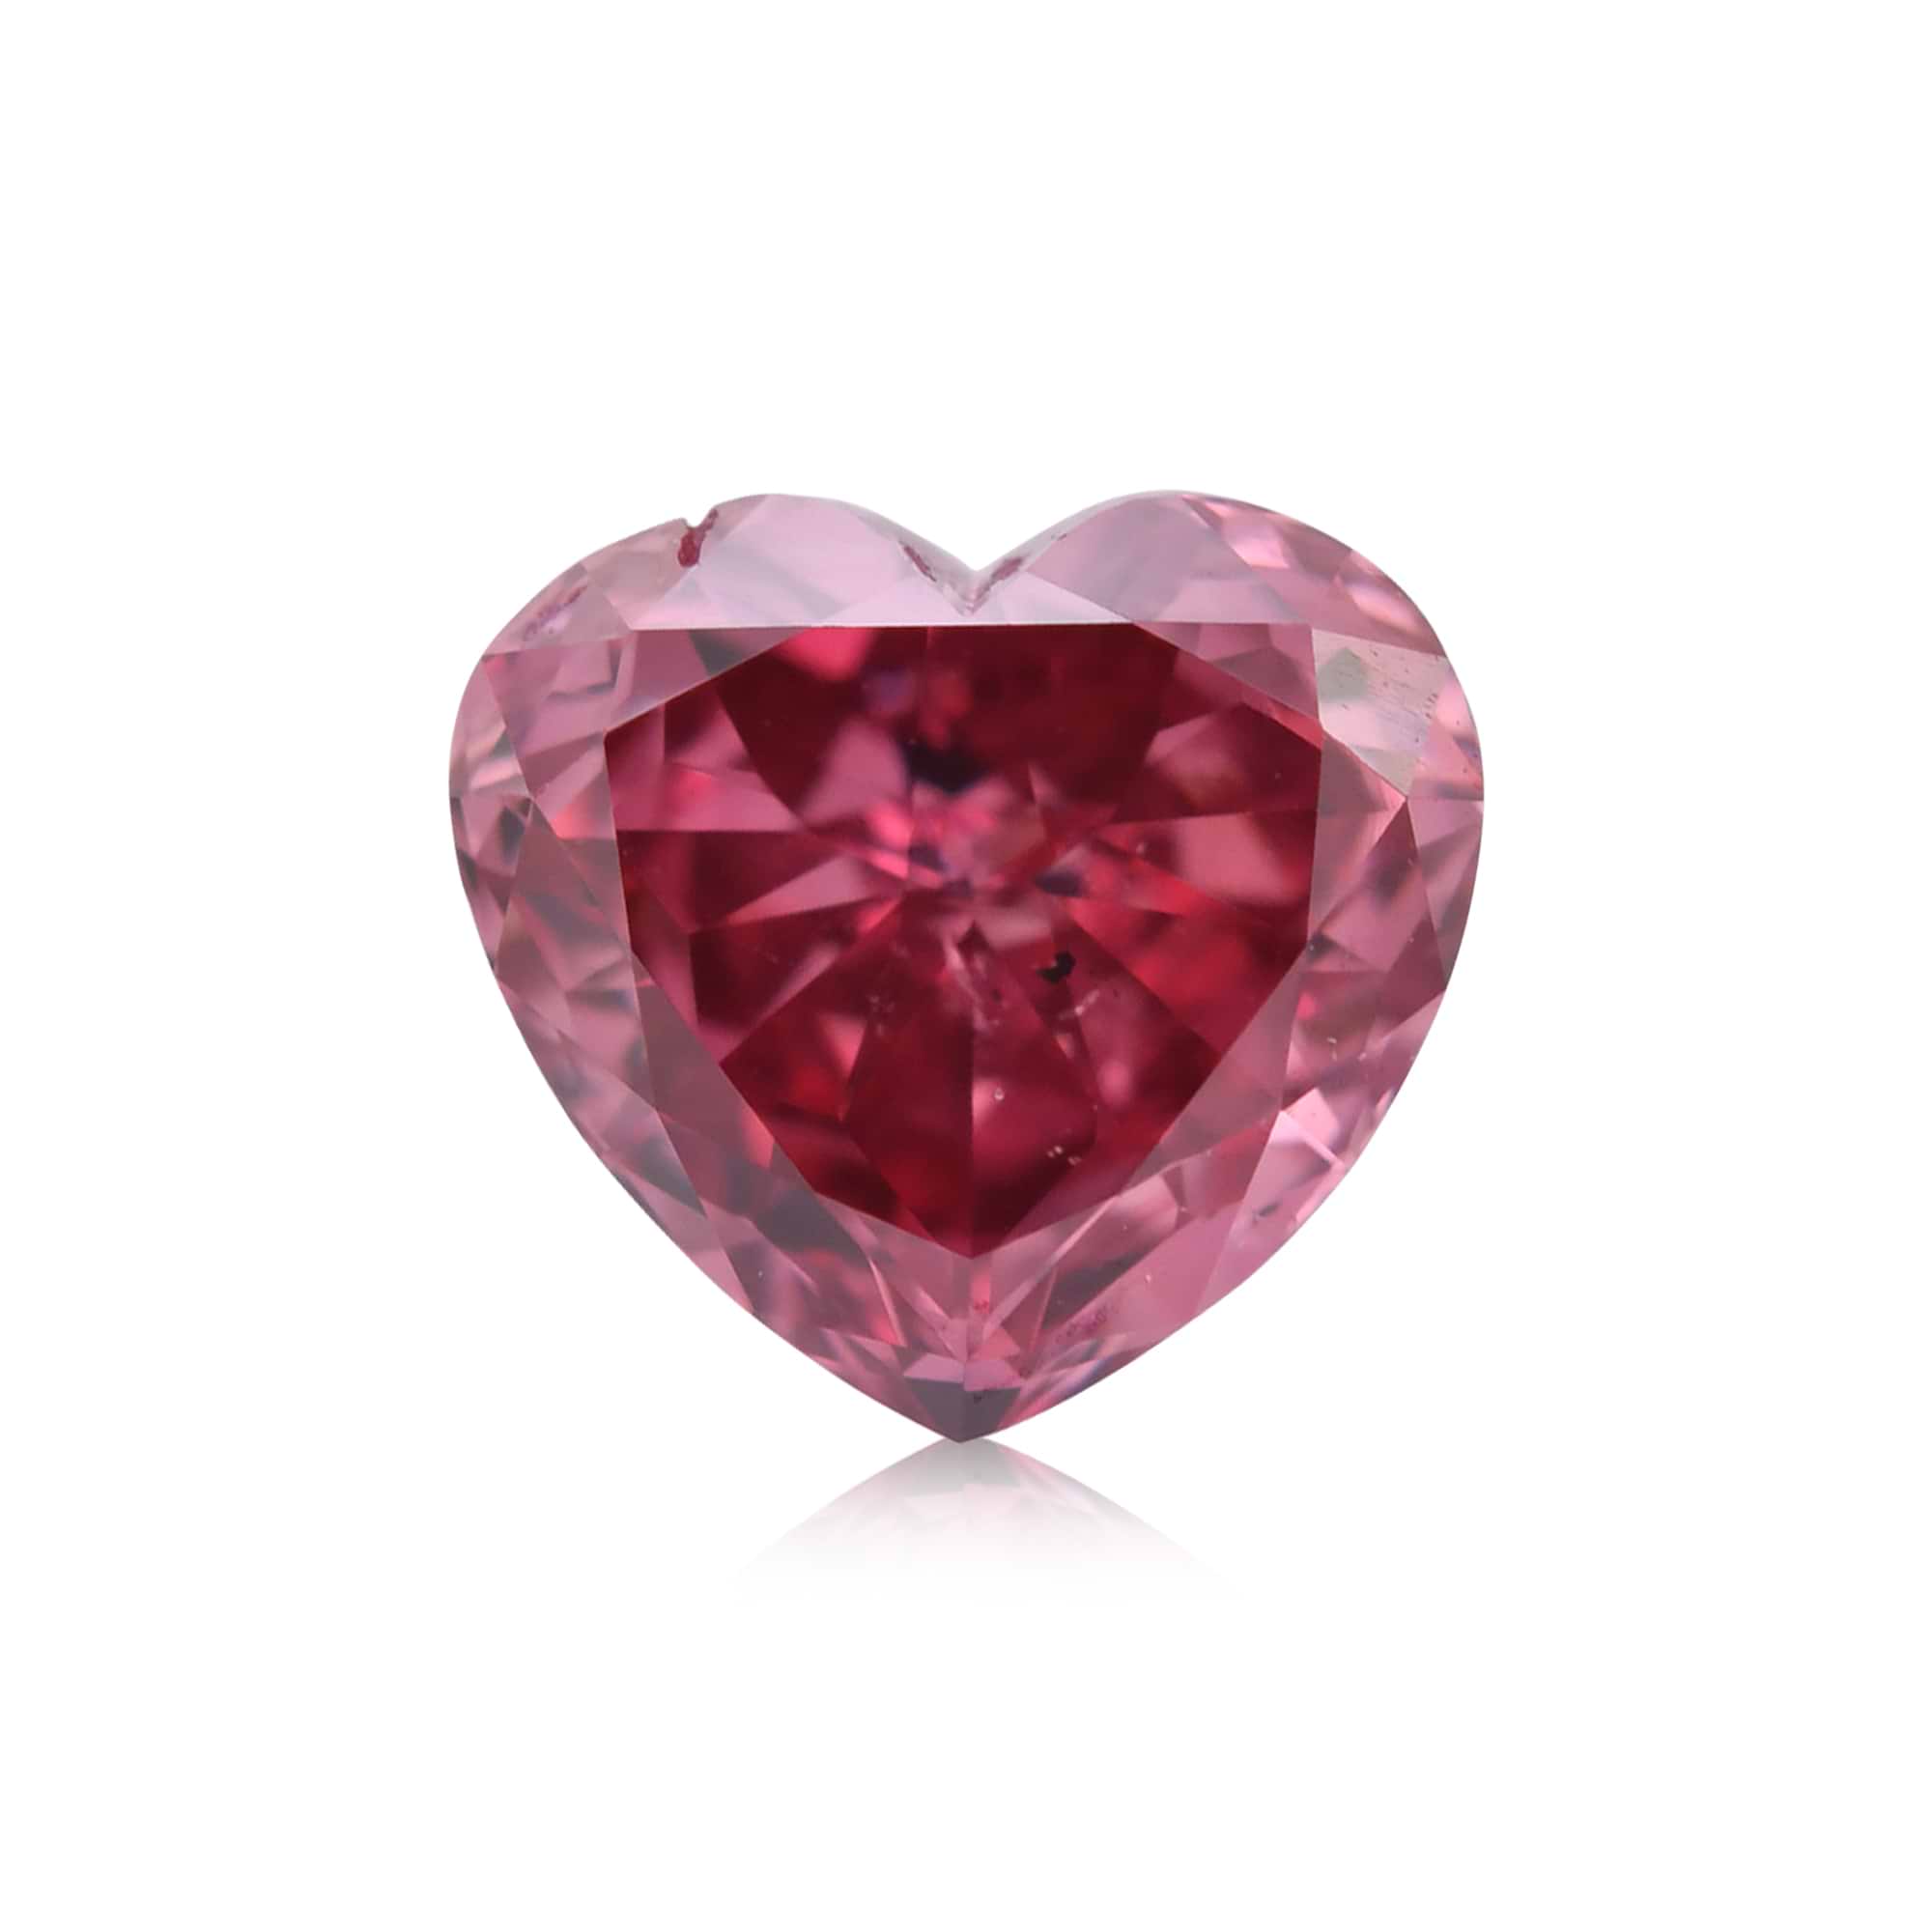  0.35 carat, Fancy Purplish Red Diamond, Heart Shape, SI1 Clarity, GIA